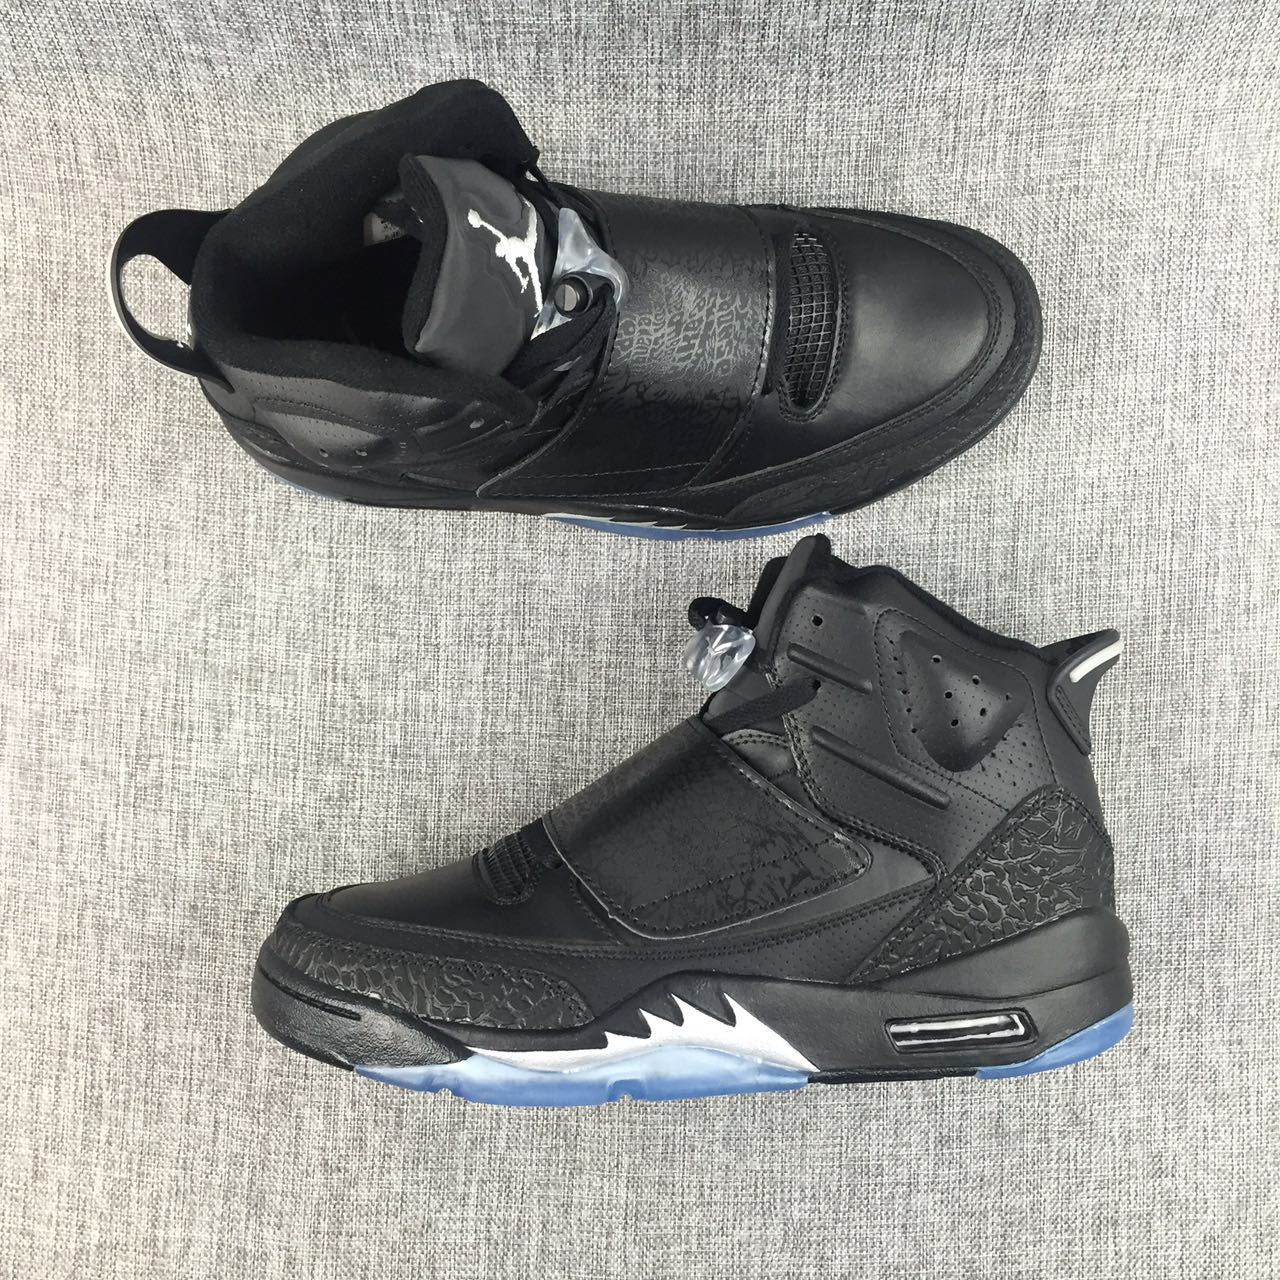 New Air Jordan 5.5 Black Shoes - Click Image to Close